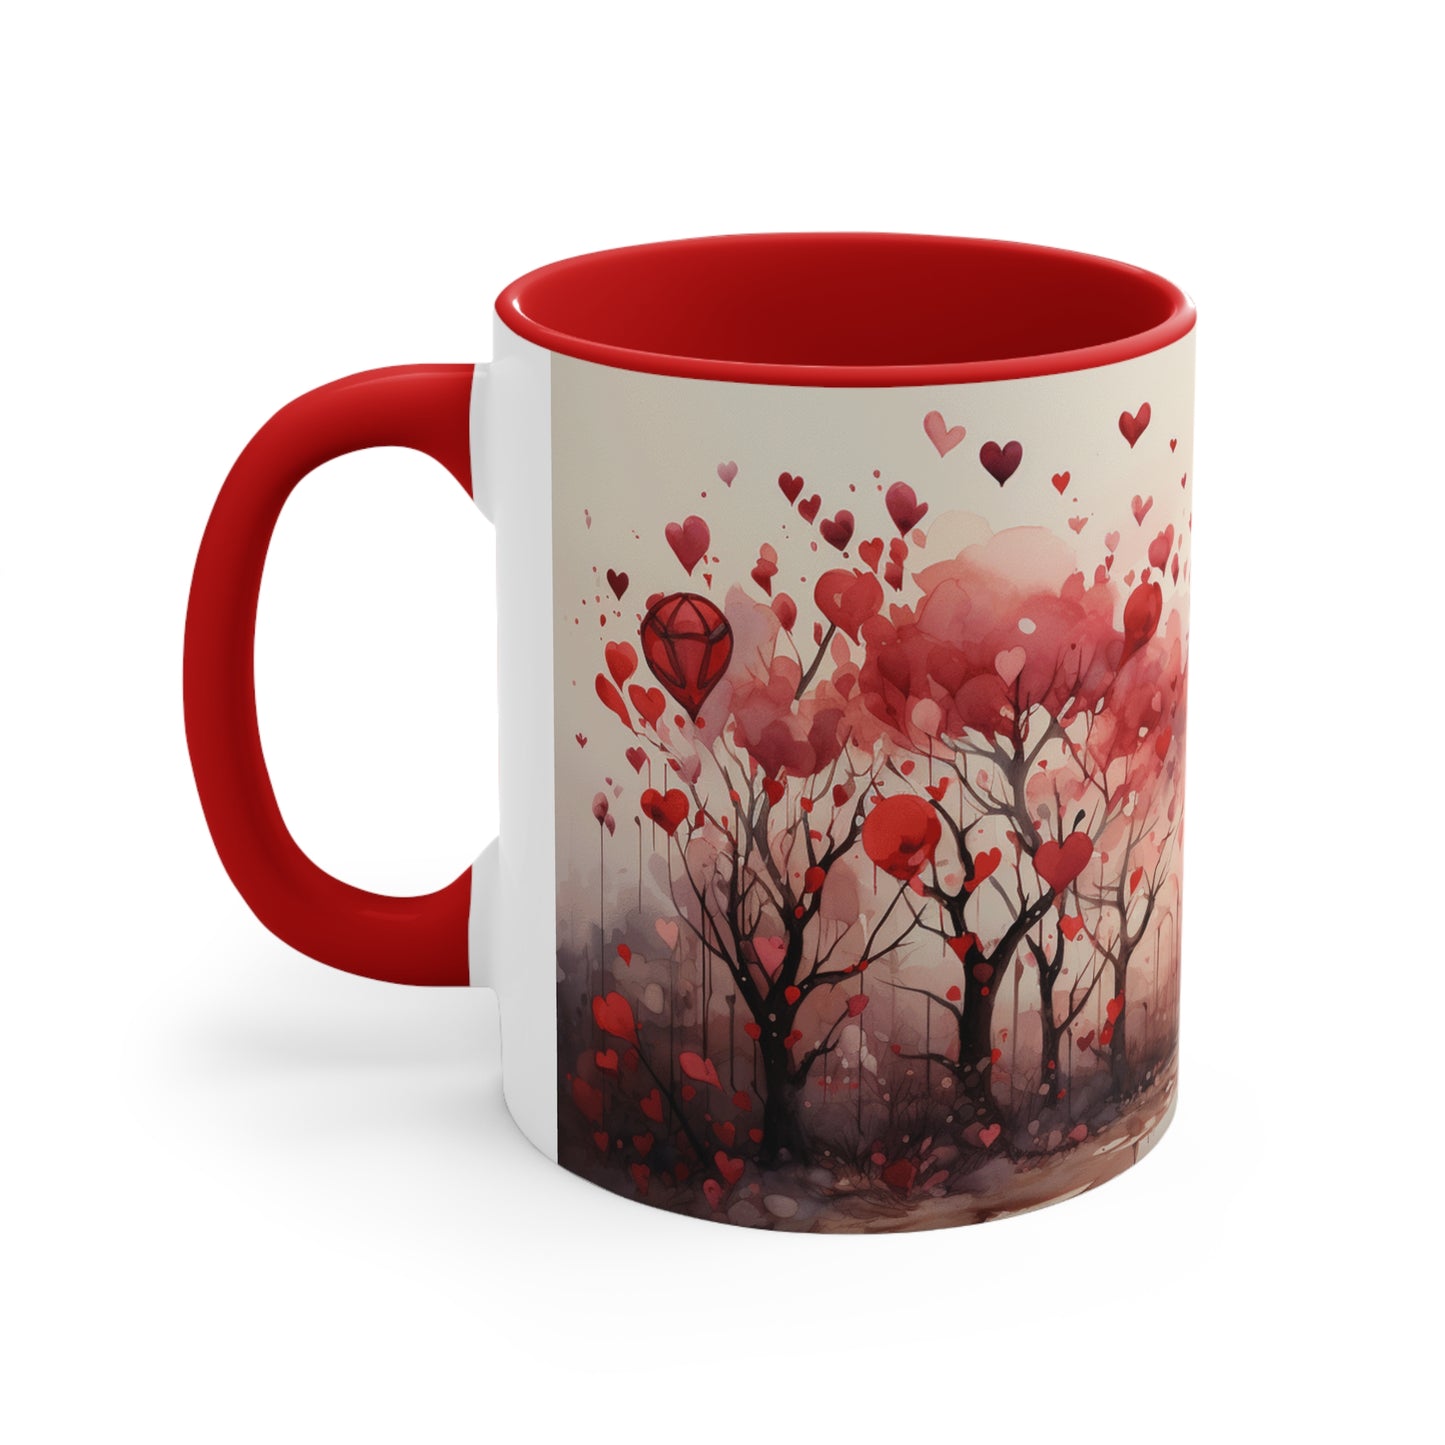 Whispers of Love mug, Valentine's Day, Accent Coffee Mug, 11oz mug, valentines gift, gift for her, be mine, heart mug, love you, couples